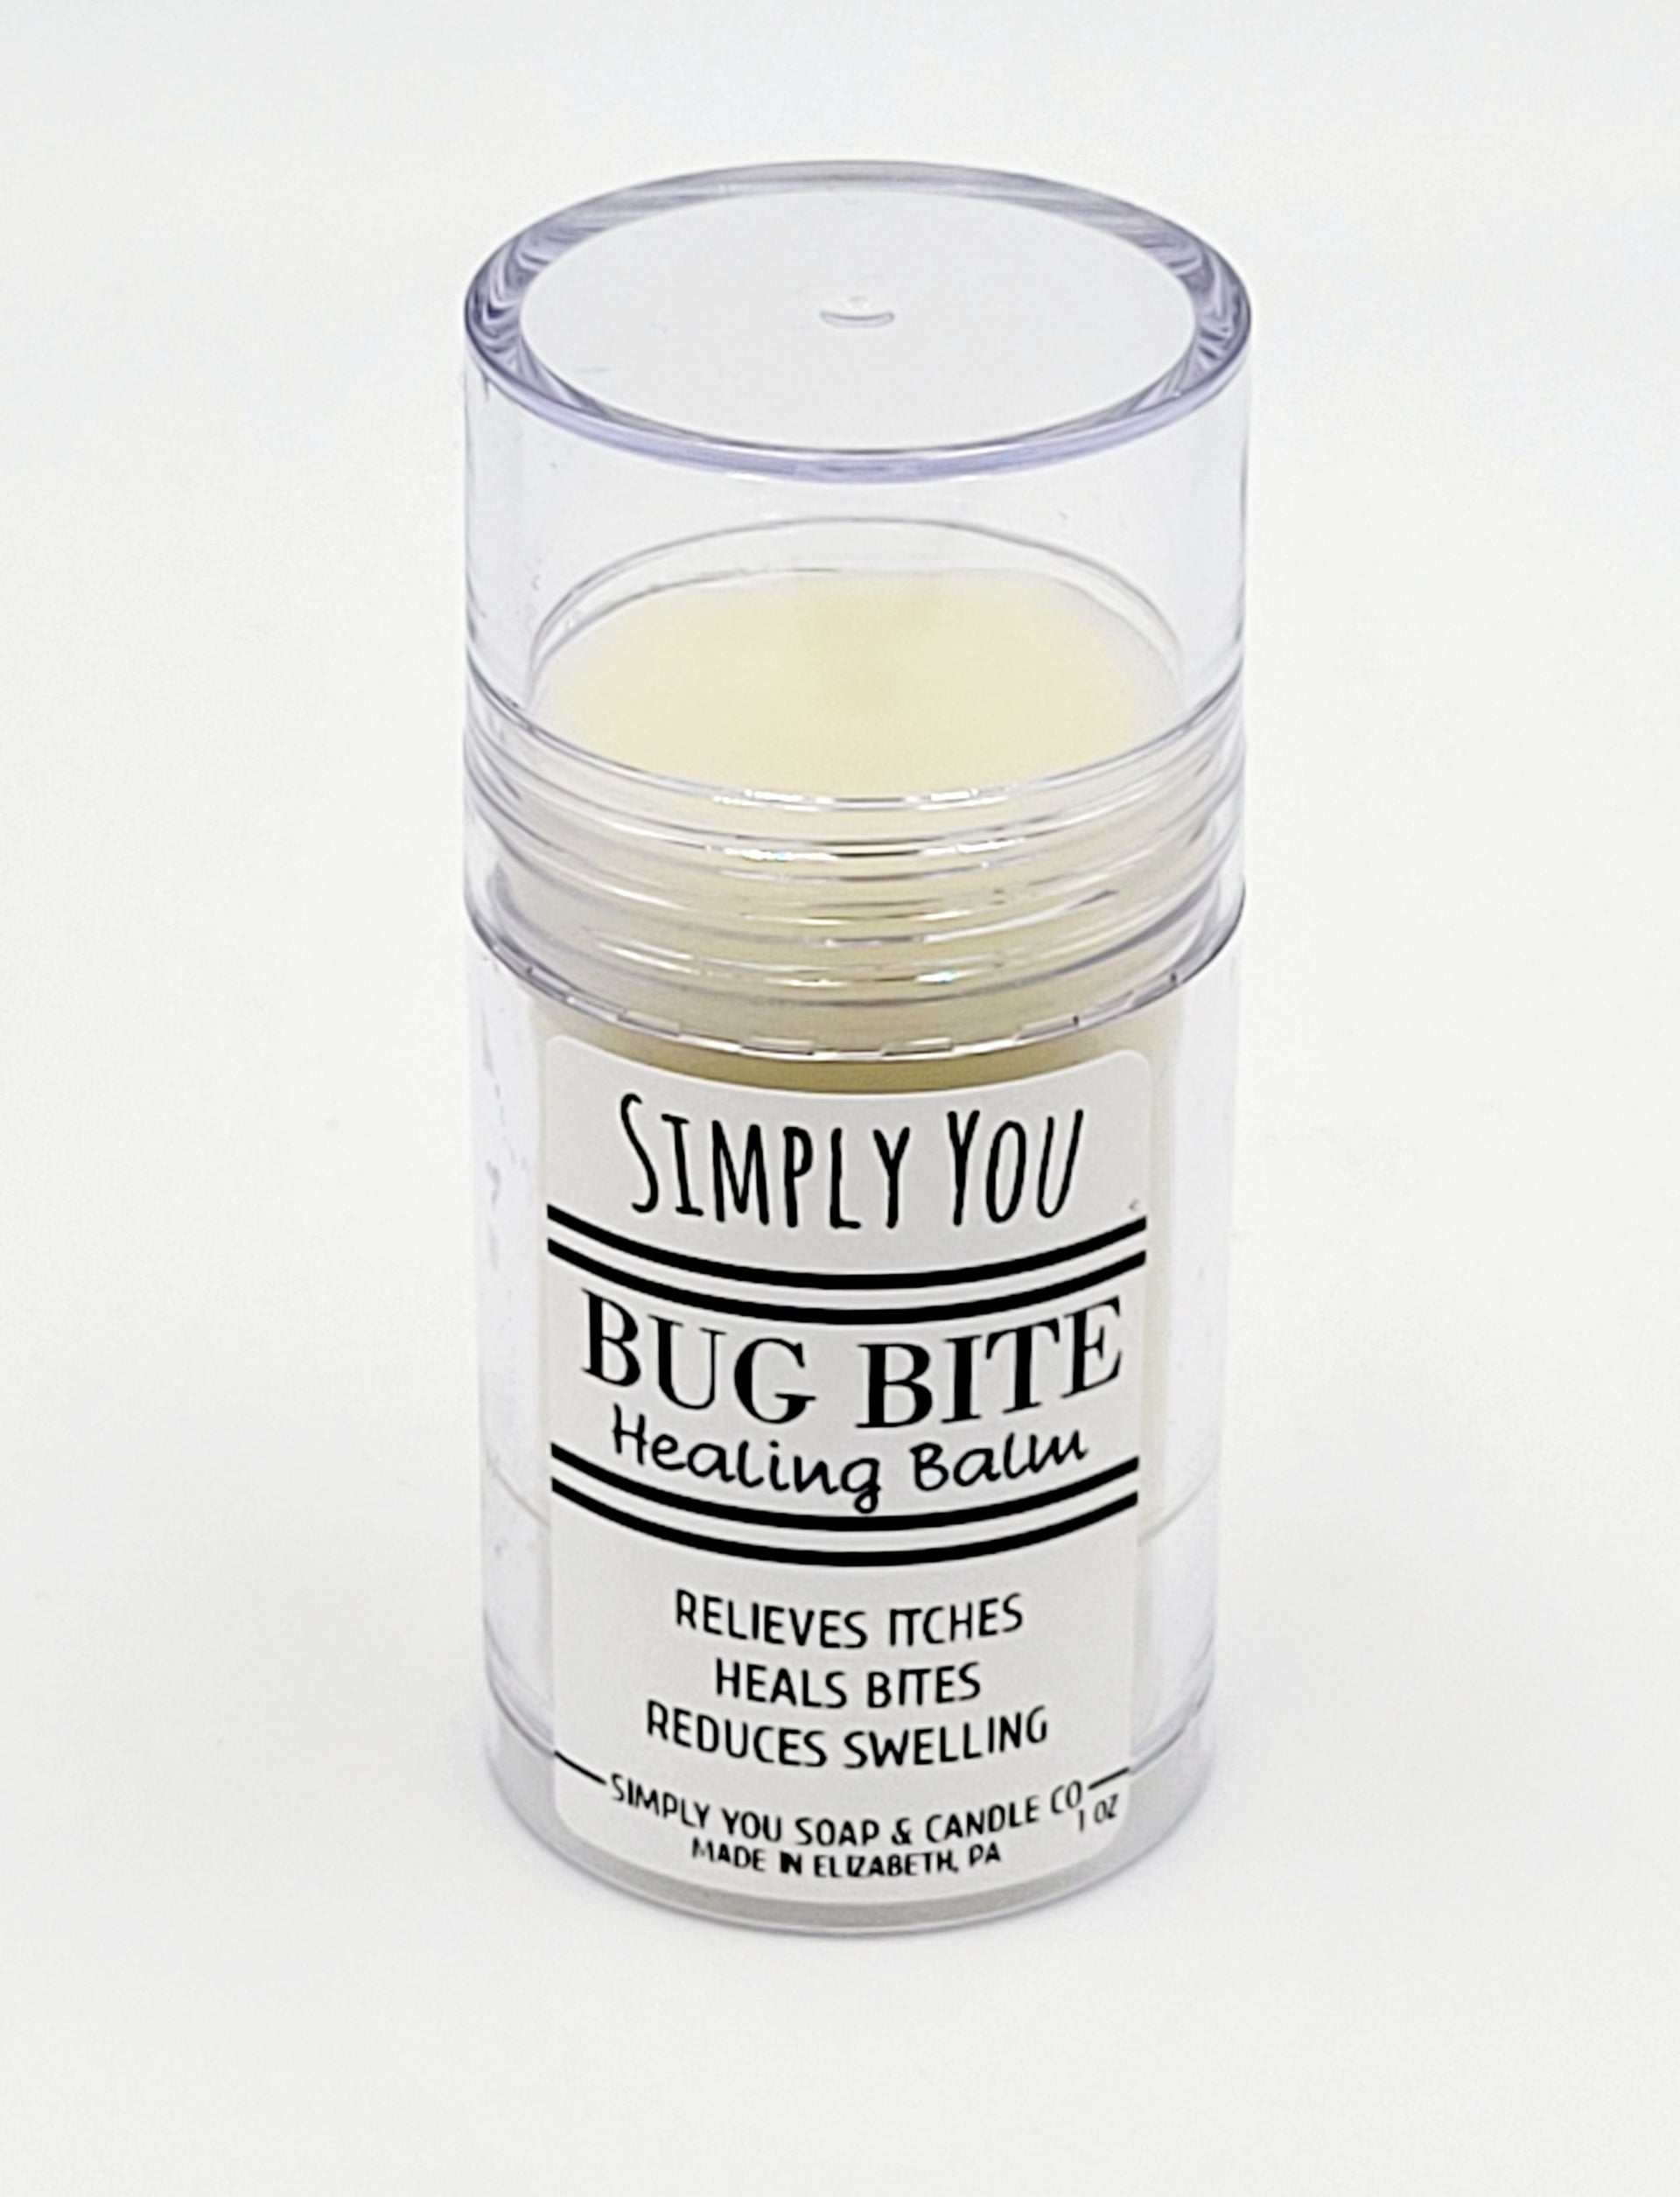 Bug Bite Healing Balm – Simply You Soap & Candle Co.